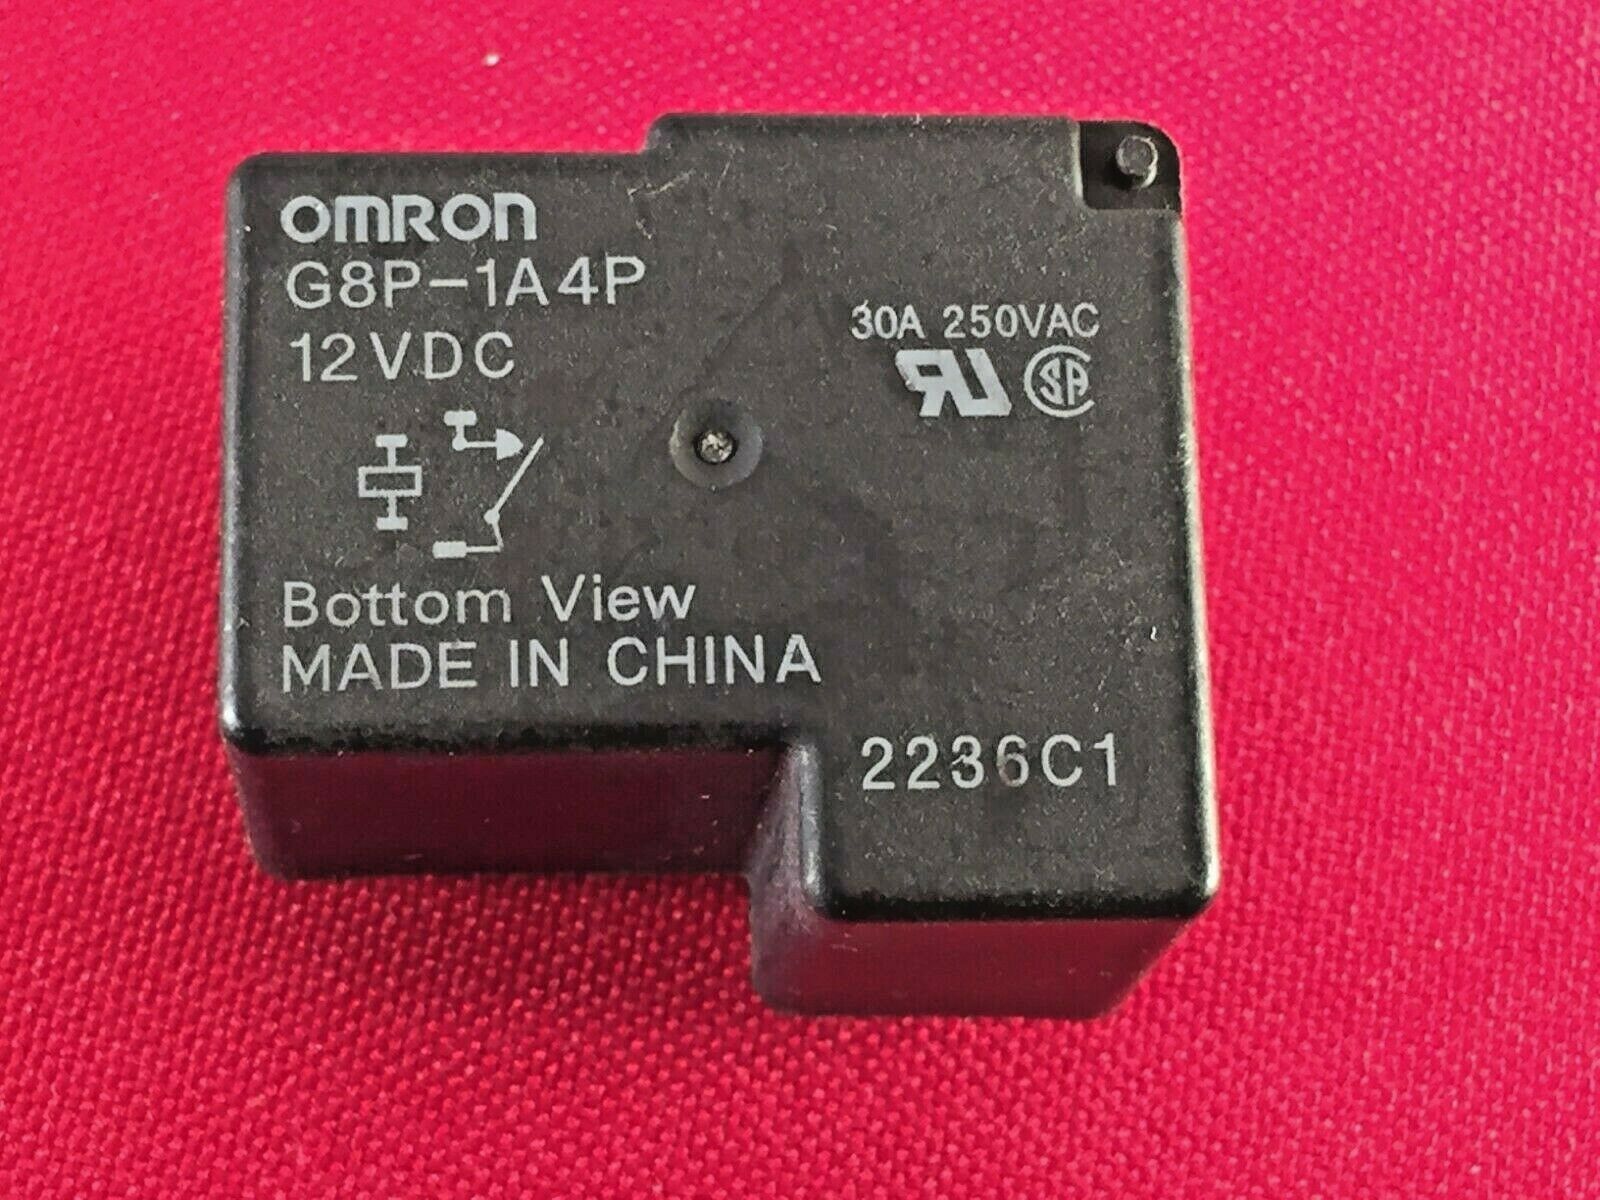 Omron G8p-1a4p 12vdc General-purpose-relay 30a 250vac